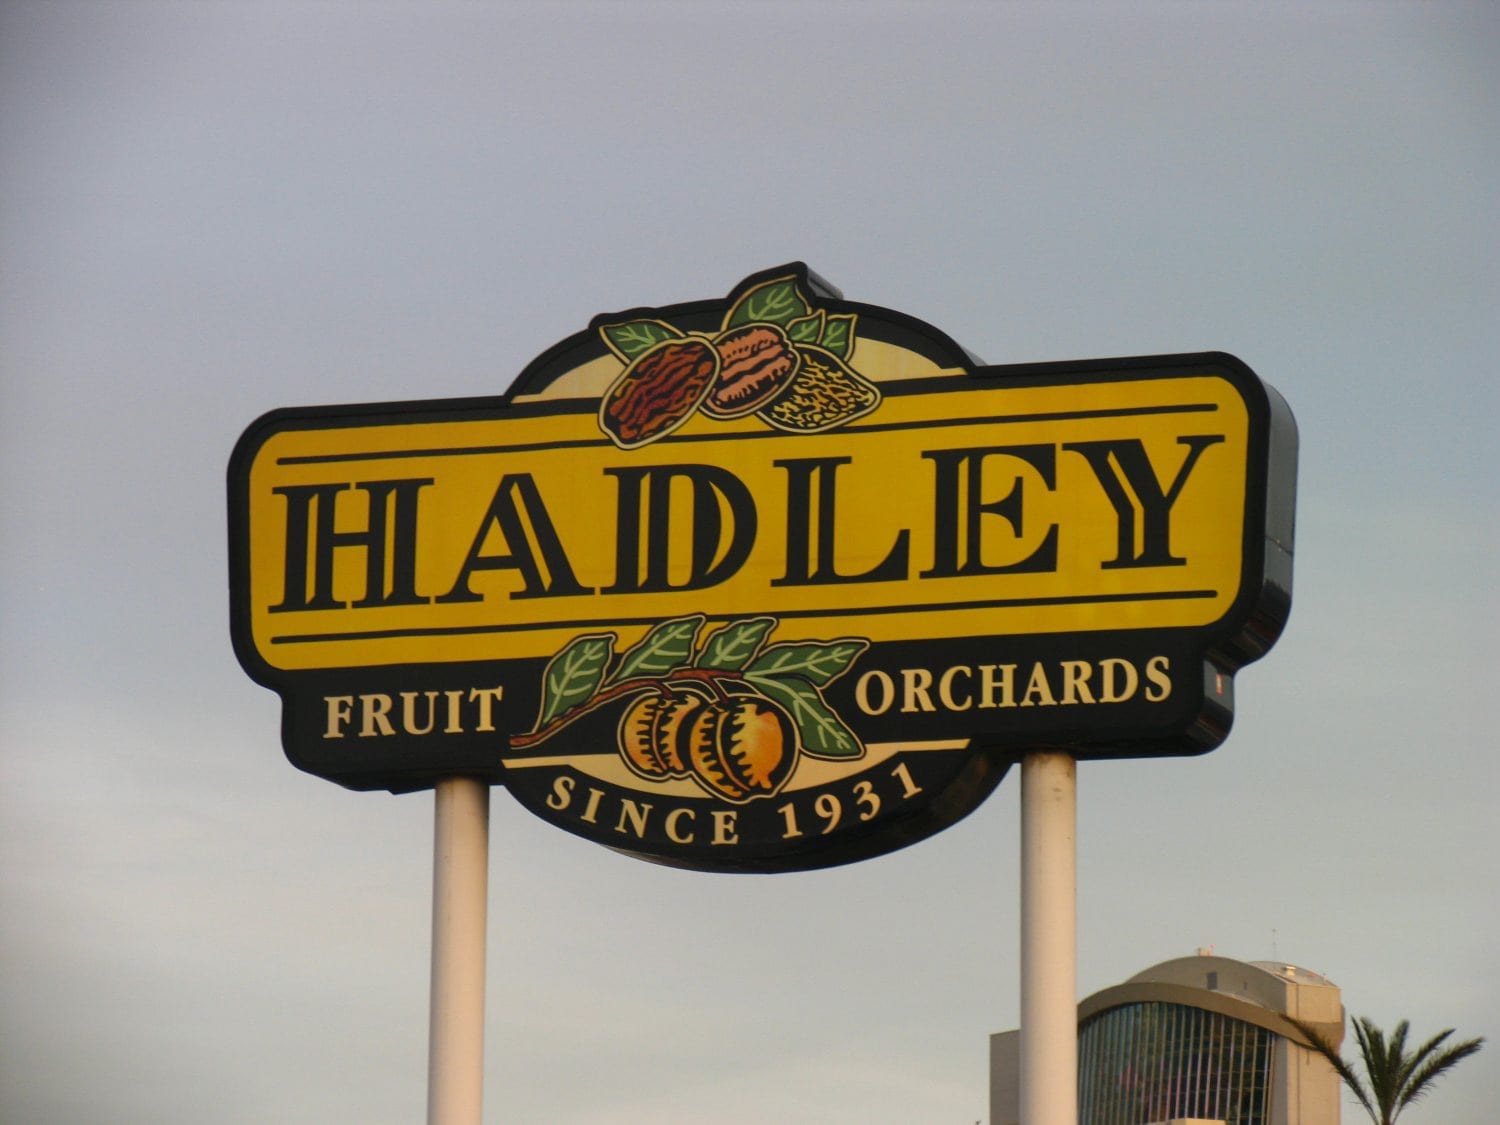 Hadleys Fruit Orchards sign.